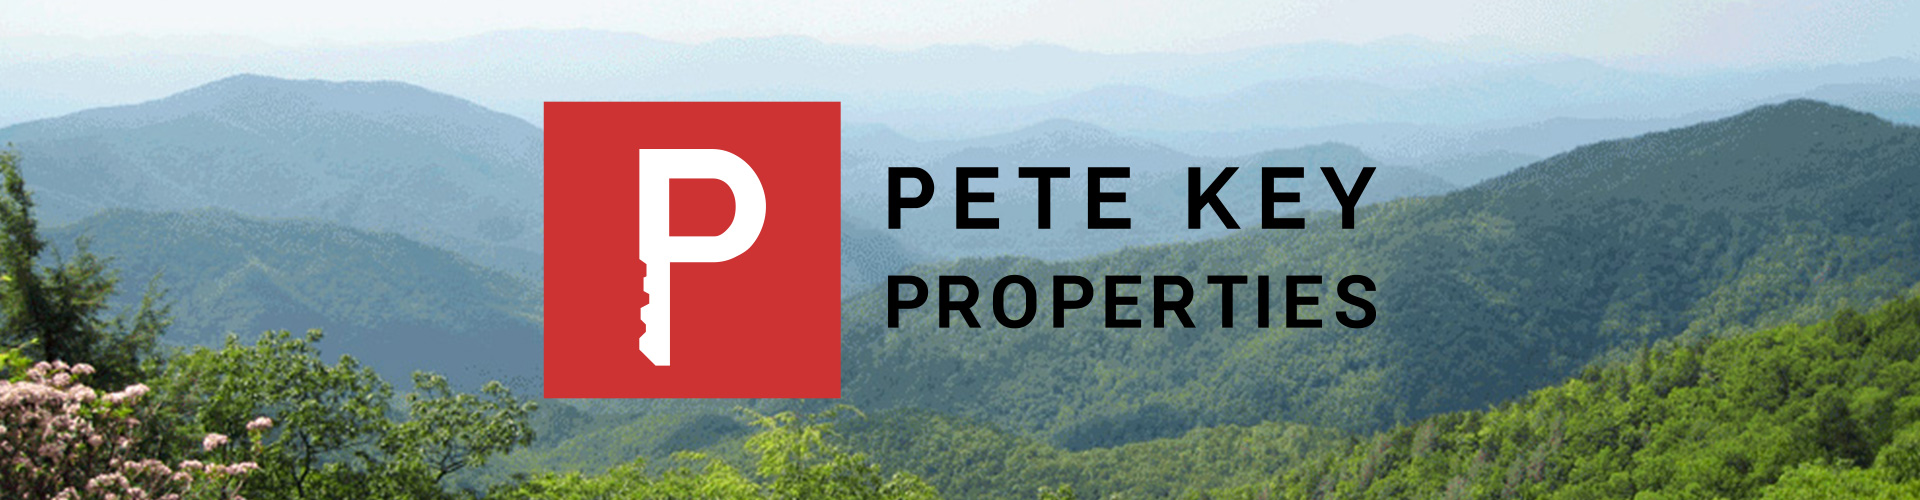 Pete Key Properties Banner